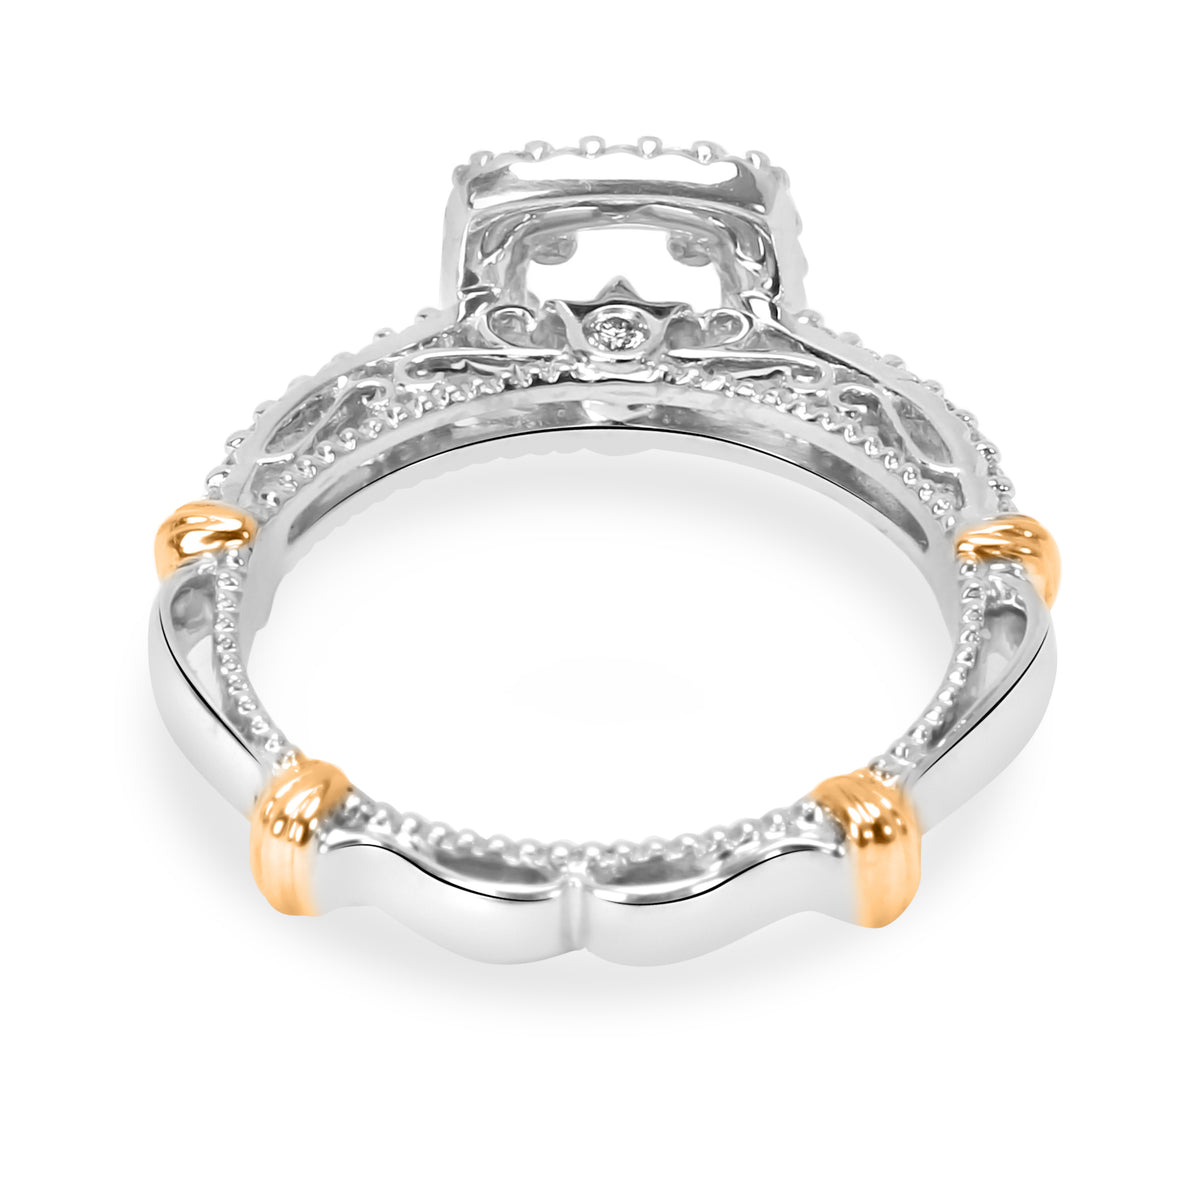 Verragio Diamond Halo Engagement Ring Setting in 14K White Gold